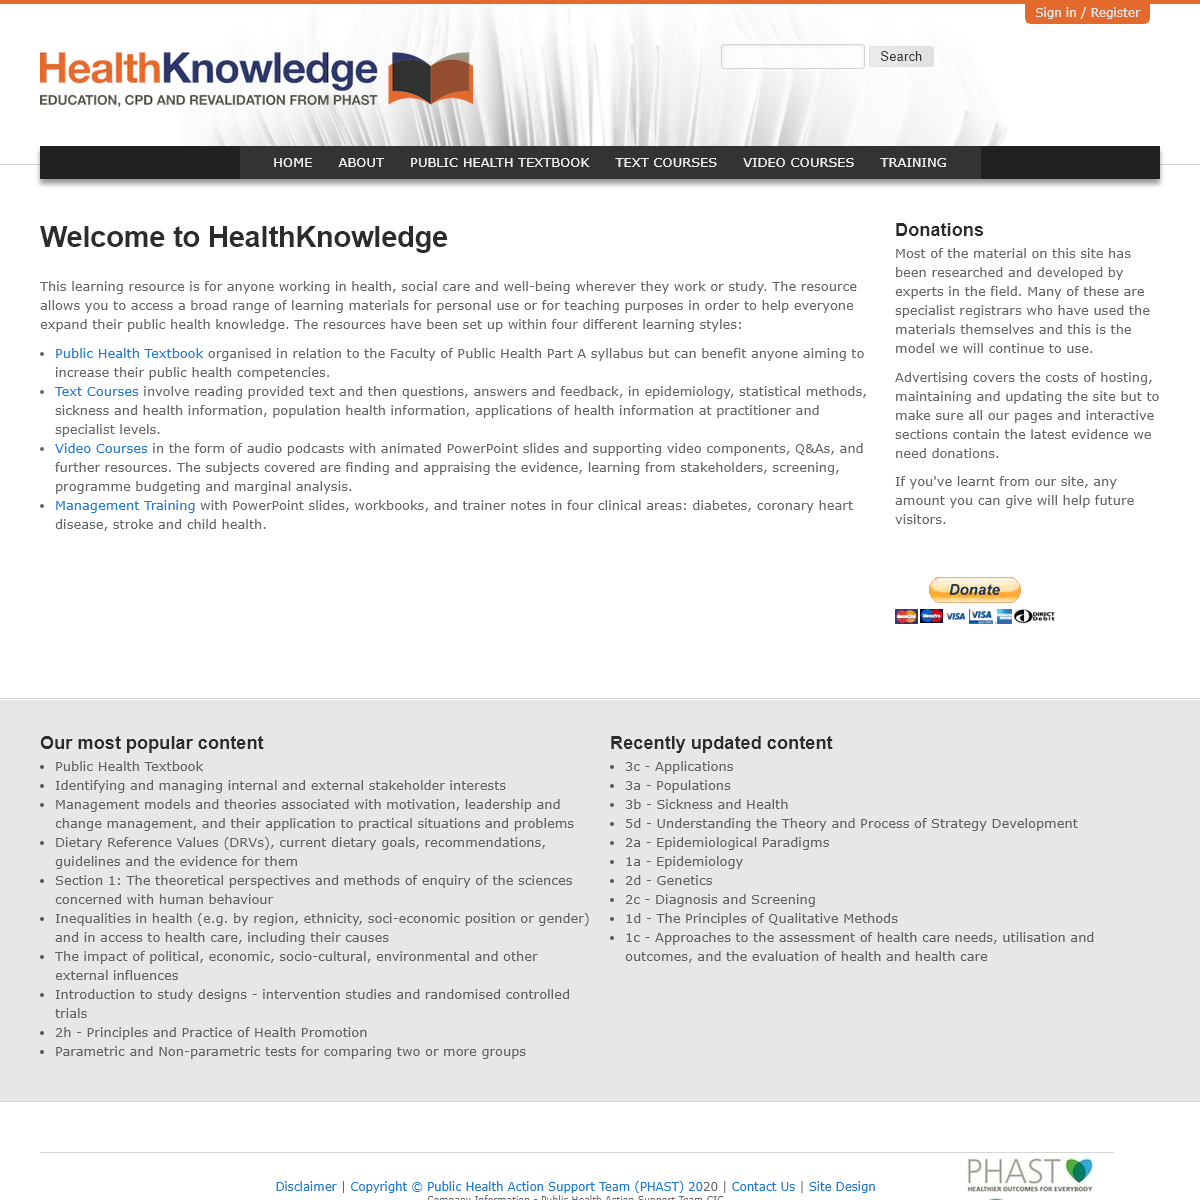 A complete backup of healthknowledge.org.uk